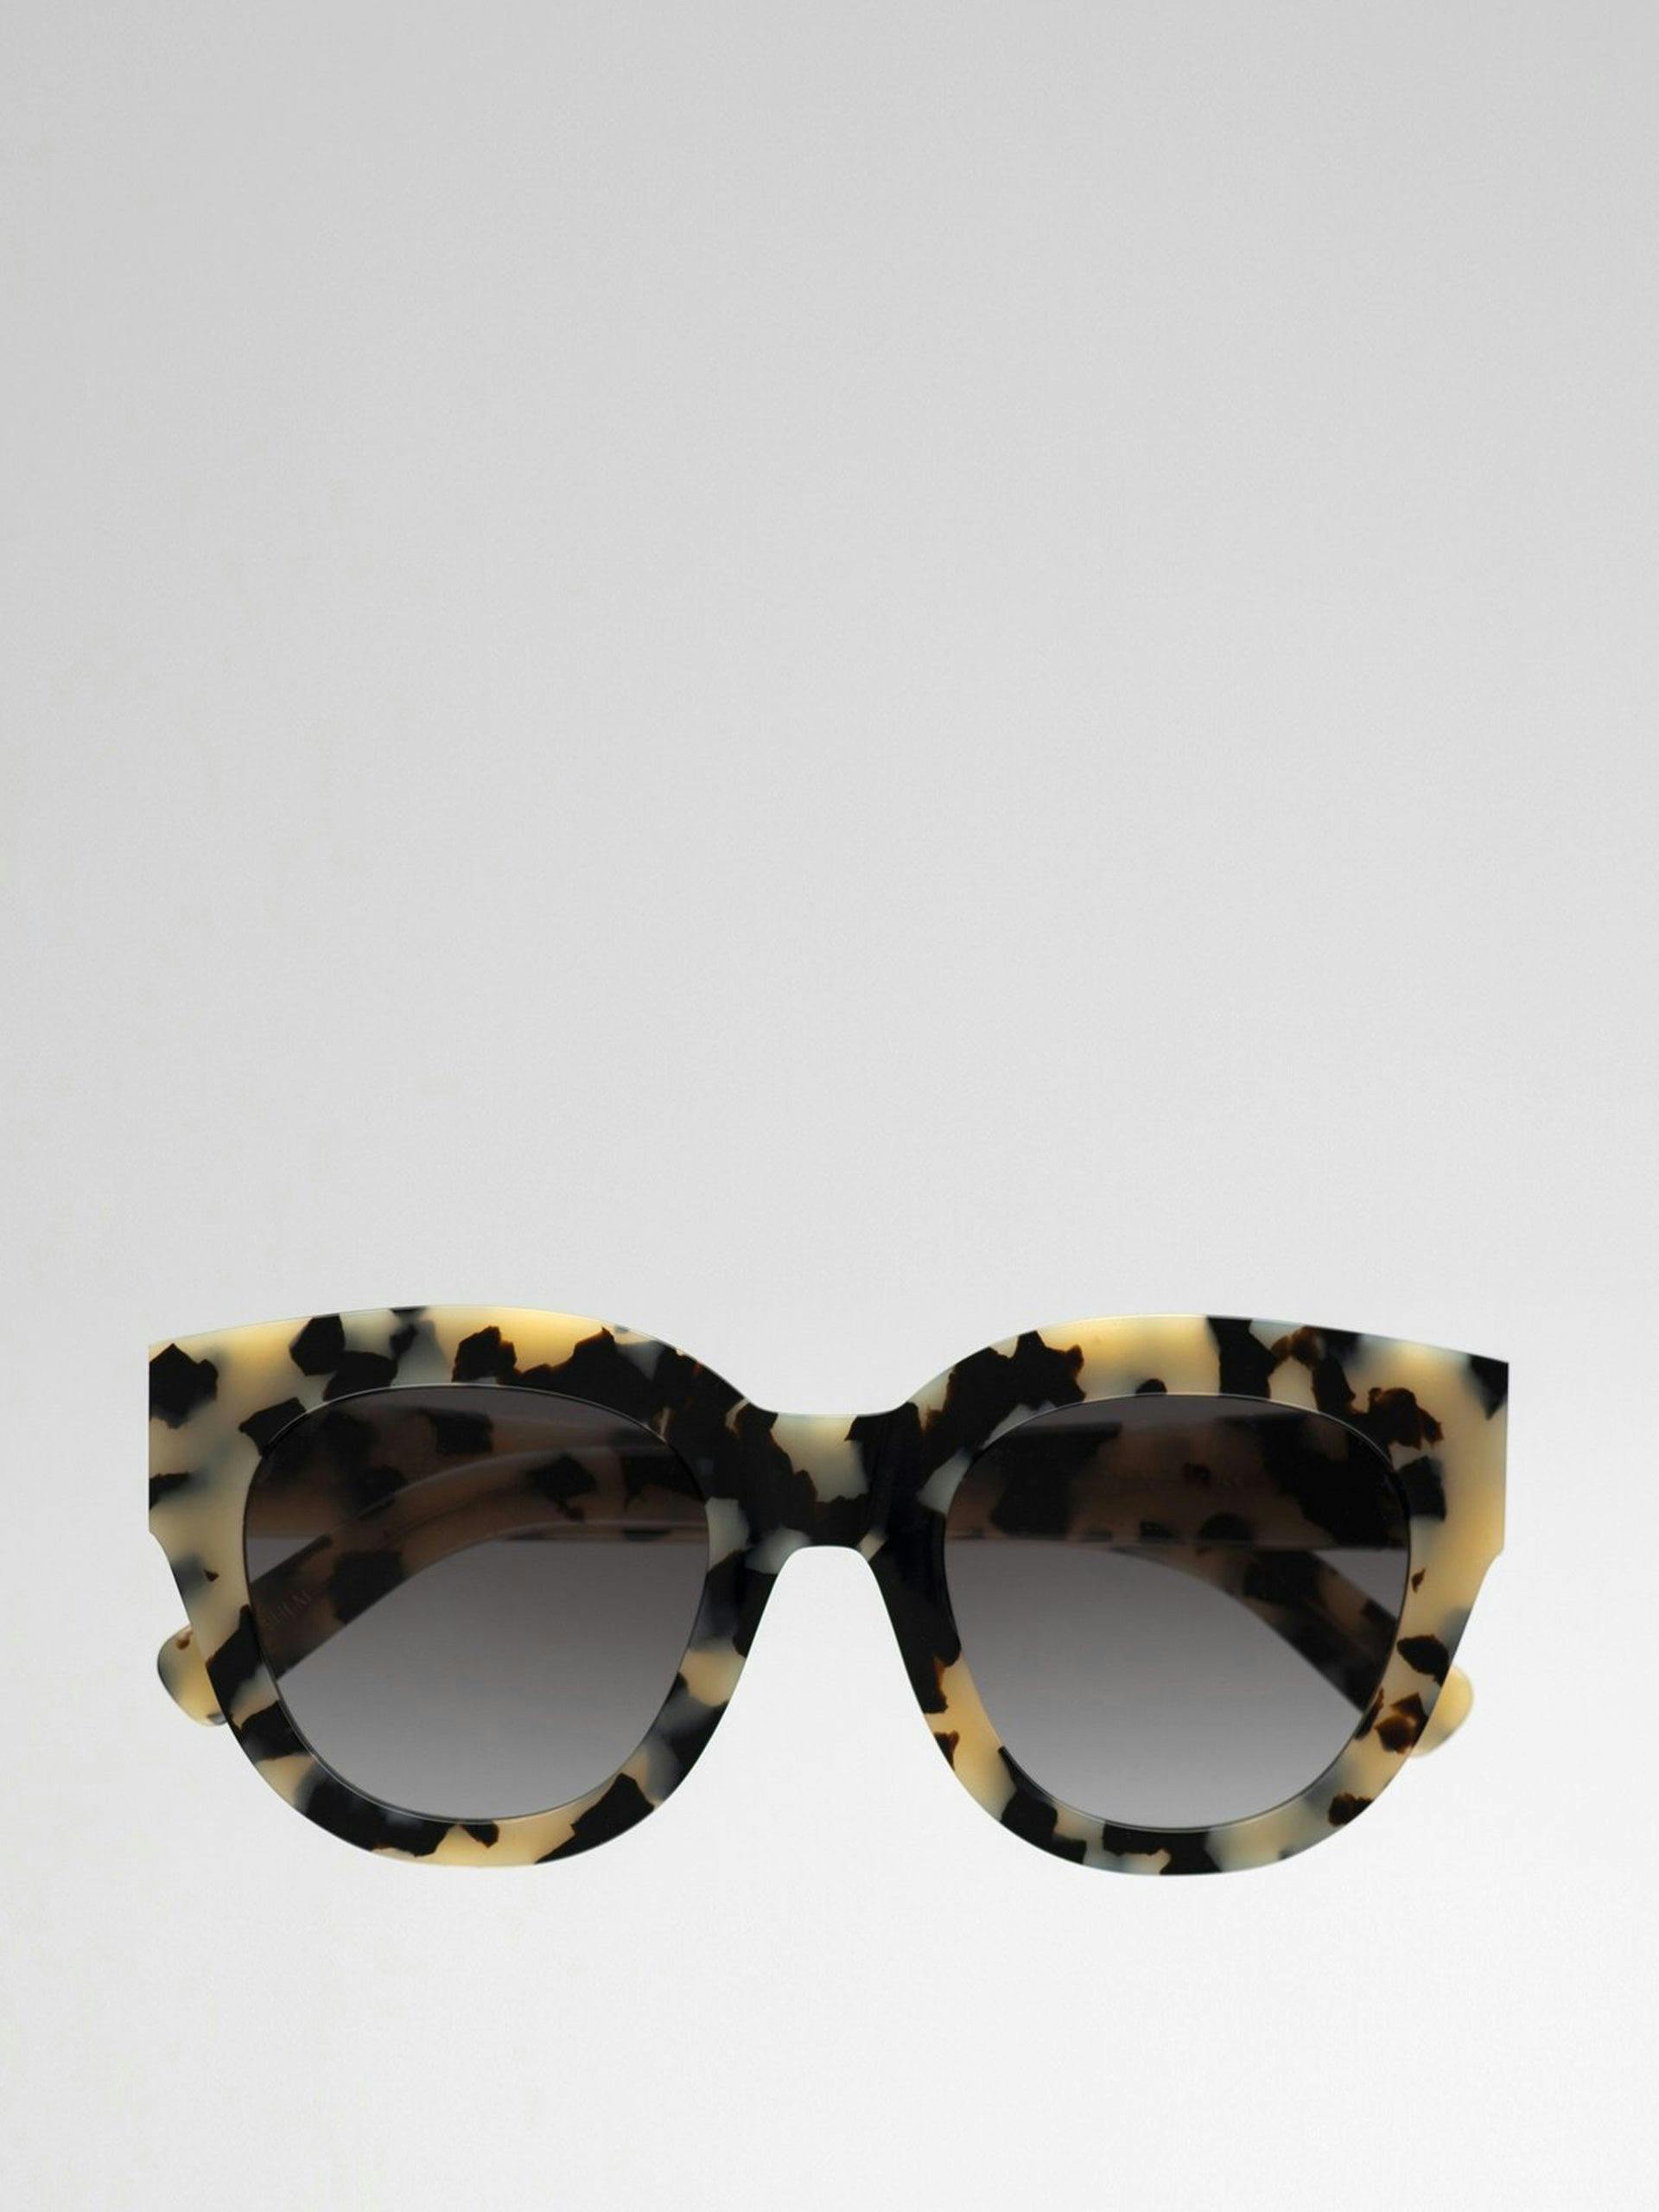 Cleo Black/White havana sunglasses